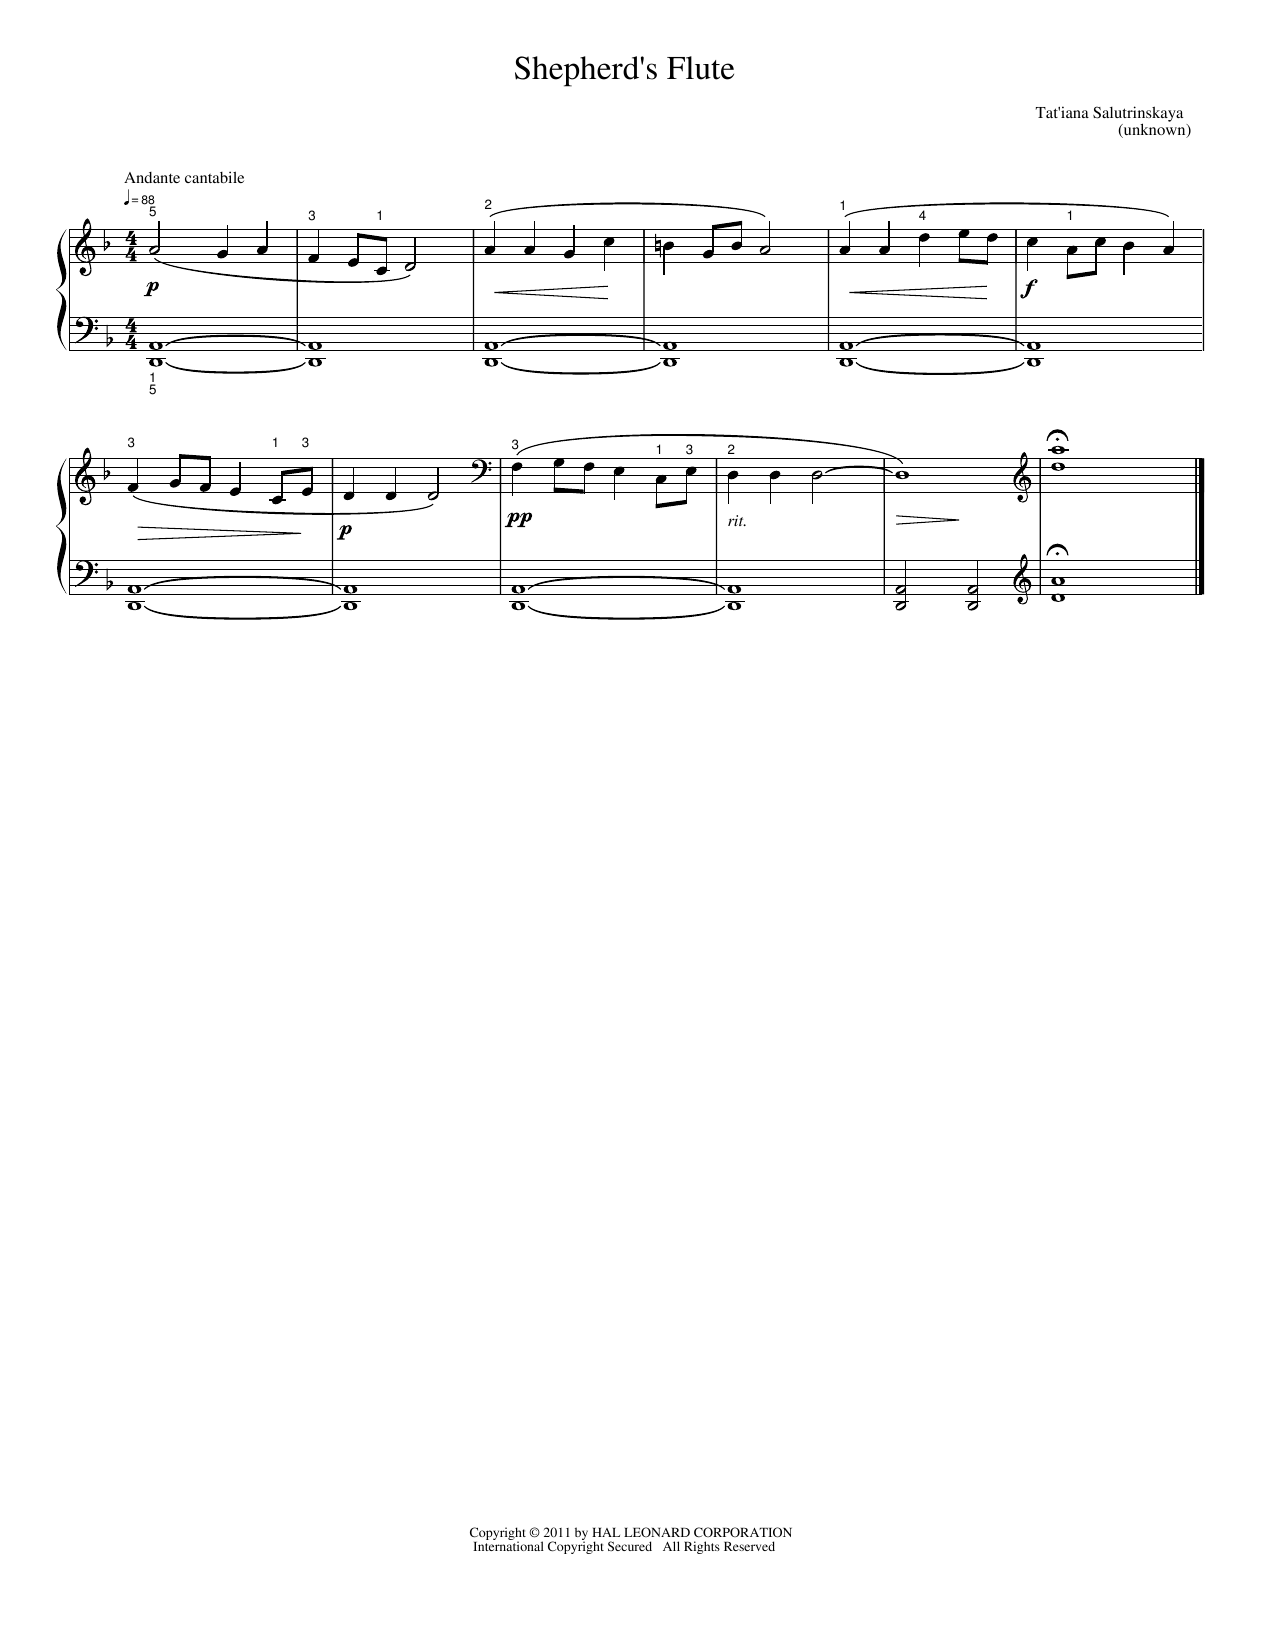 Download Tat'Iana Salutrinskaya Shepherd'S Flute Sheet Music and learn how to play Easy Piano PDF digital score in minutes